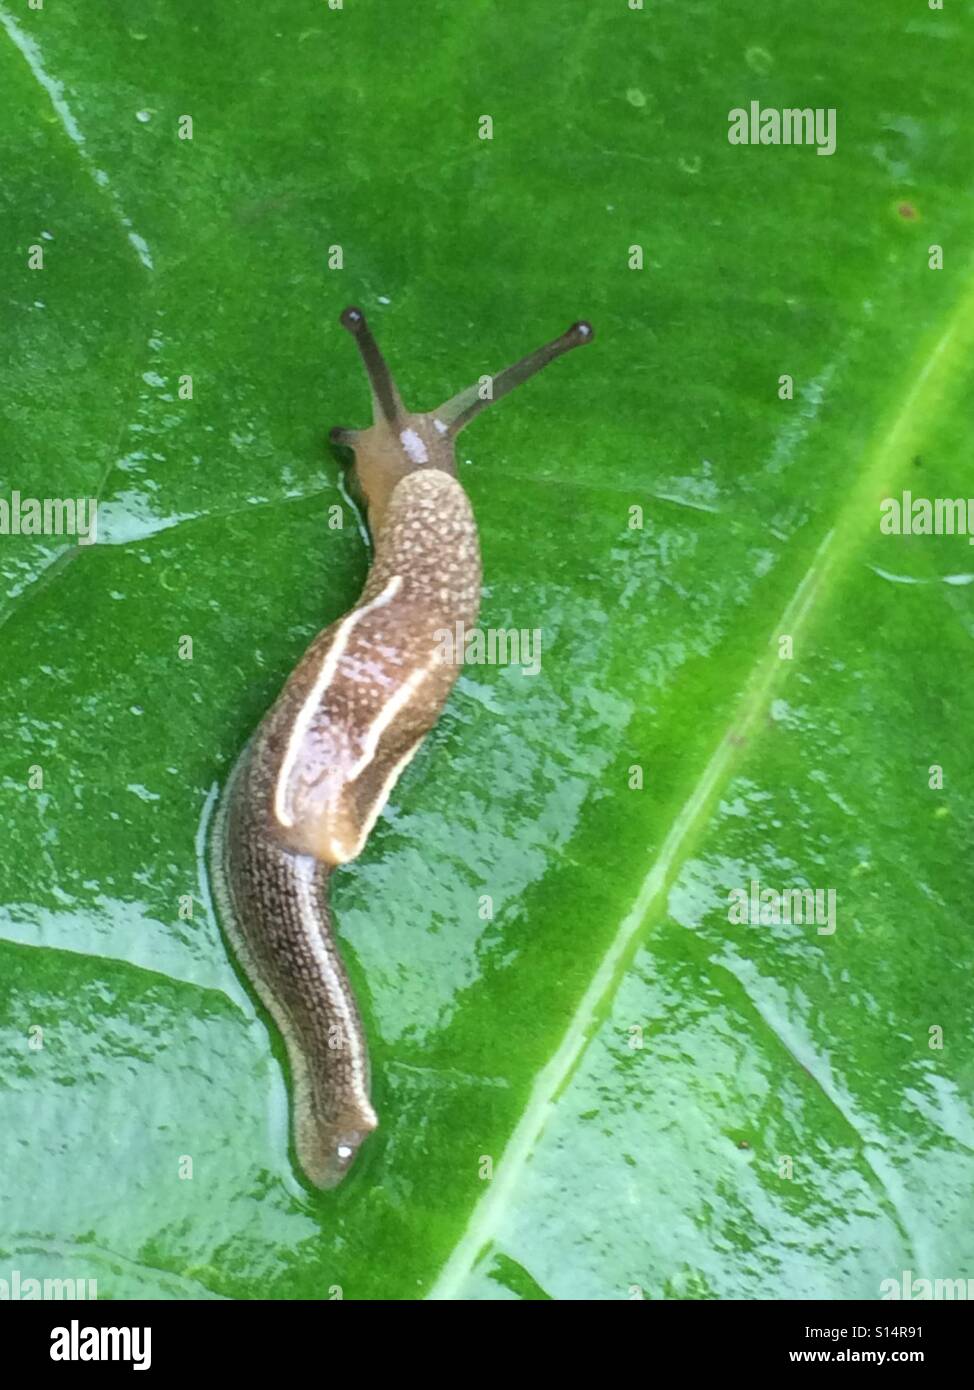 Snail on a rain dampened leaf. Stock Photo